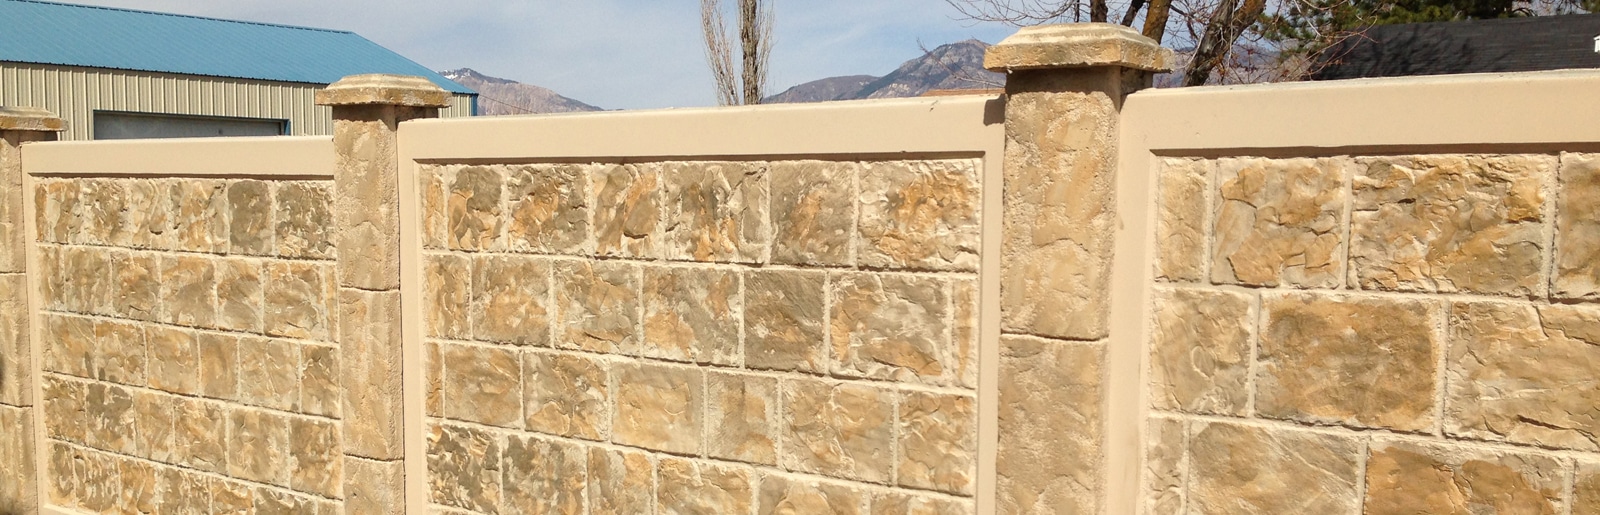 Concrete Fence Installation Utah